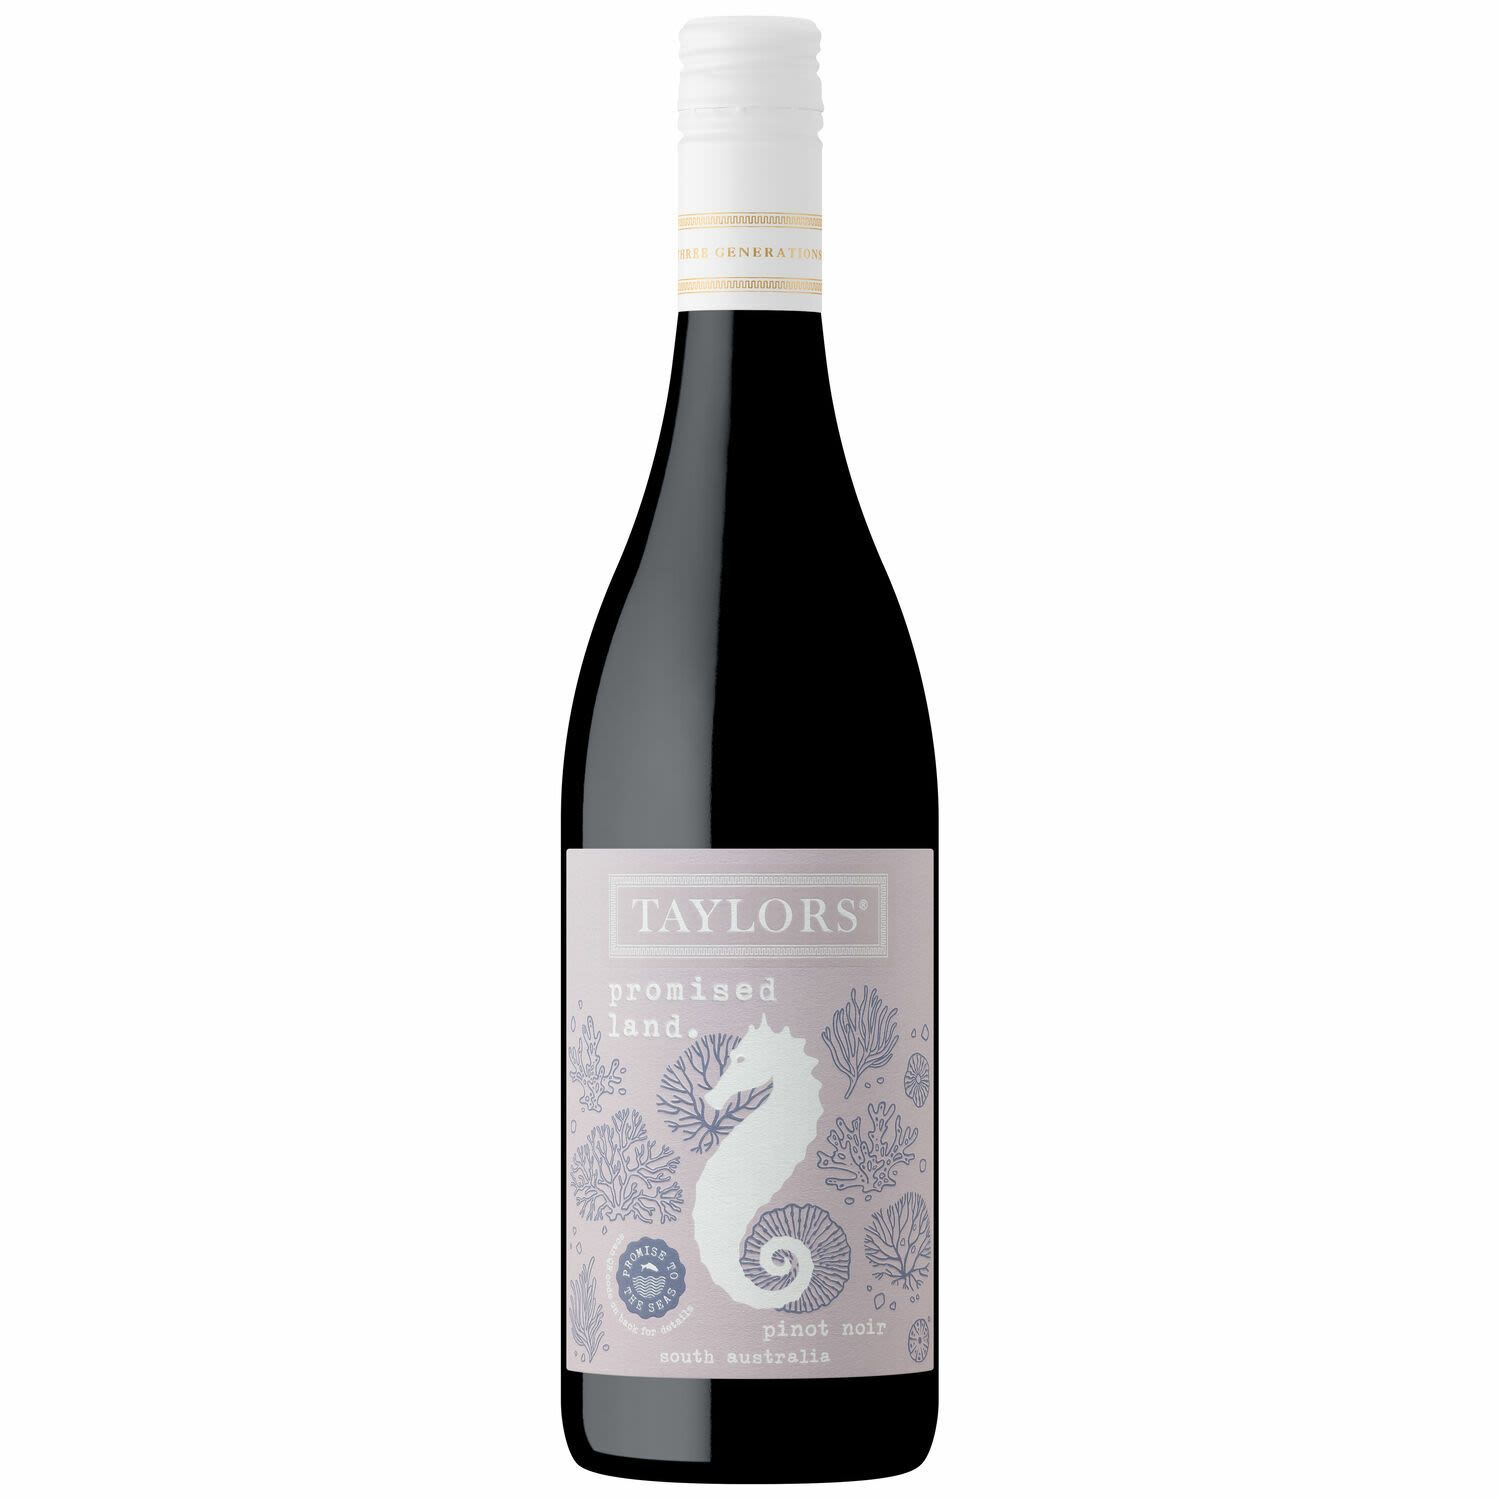 Taylors Promised Land Pinot Noir 750mL Bottle